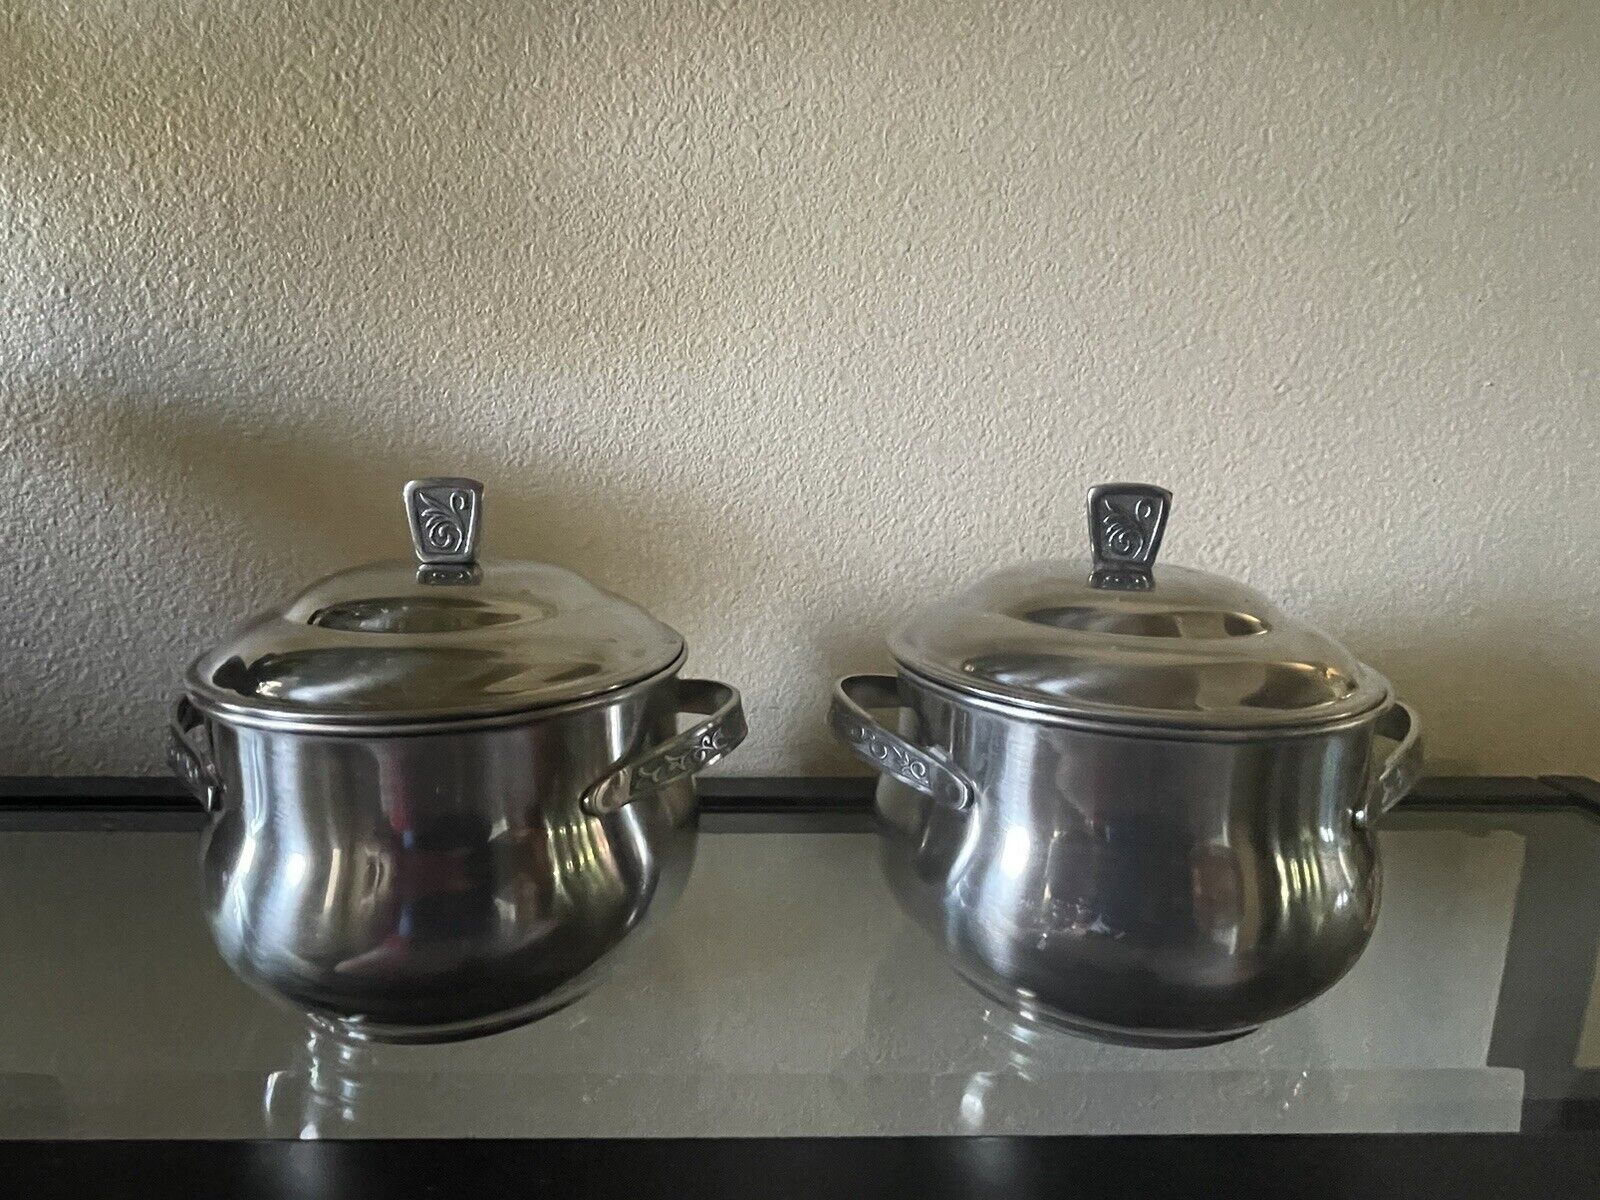 Monterey Stainless Steel Server Pot - Set Of 2 Holloware w/ Lid- Vintage